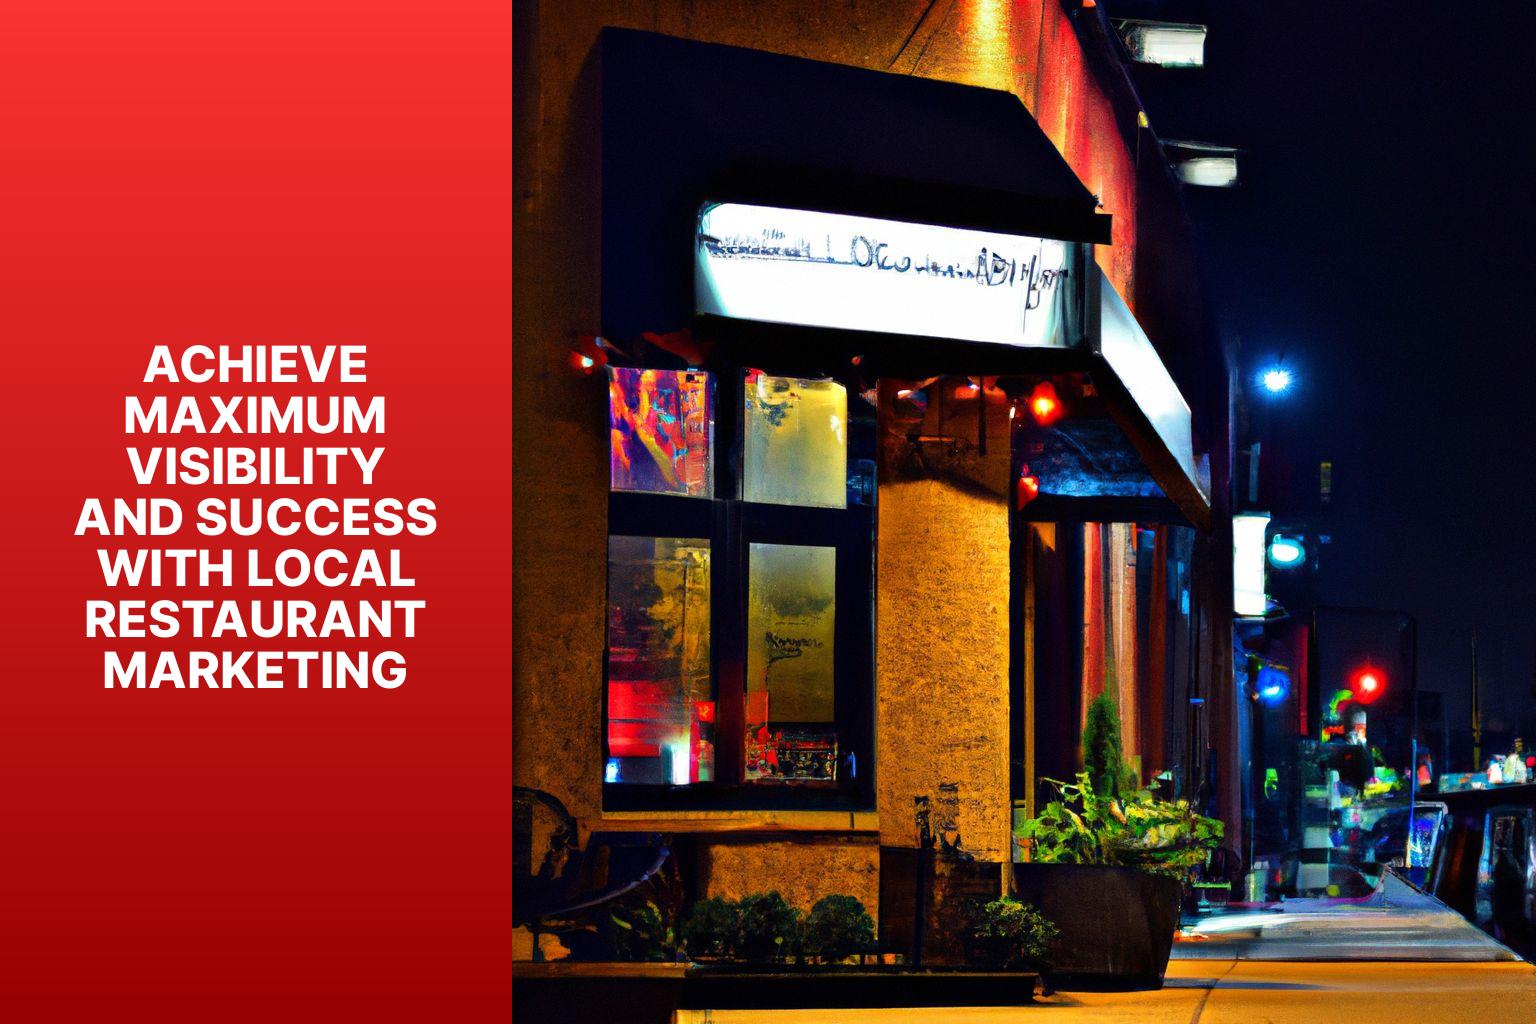 Achieve Maximum Visibility and Success with Local Restaurant Marketing